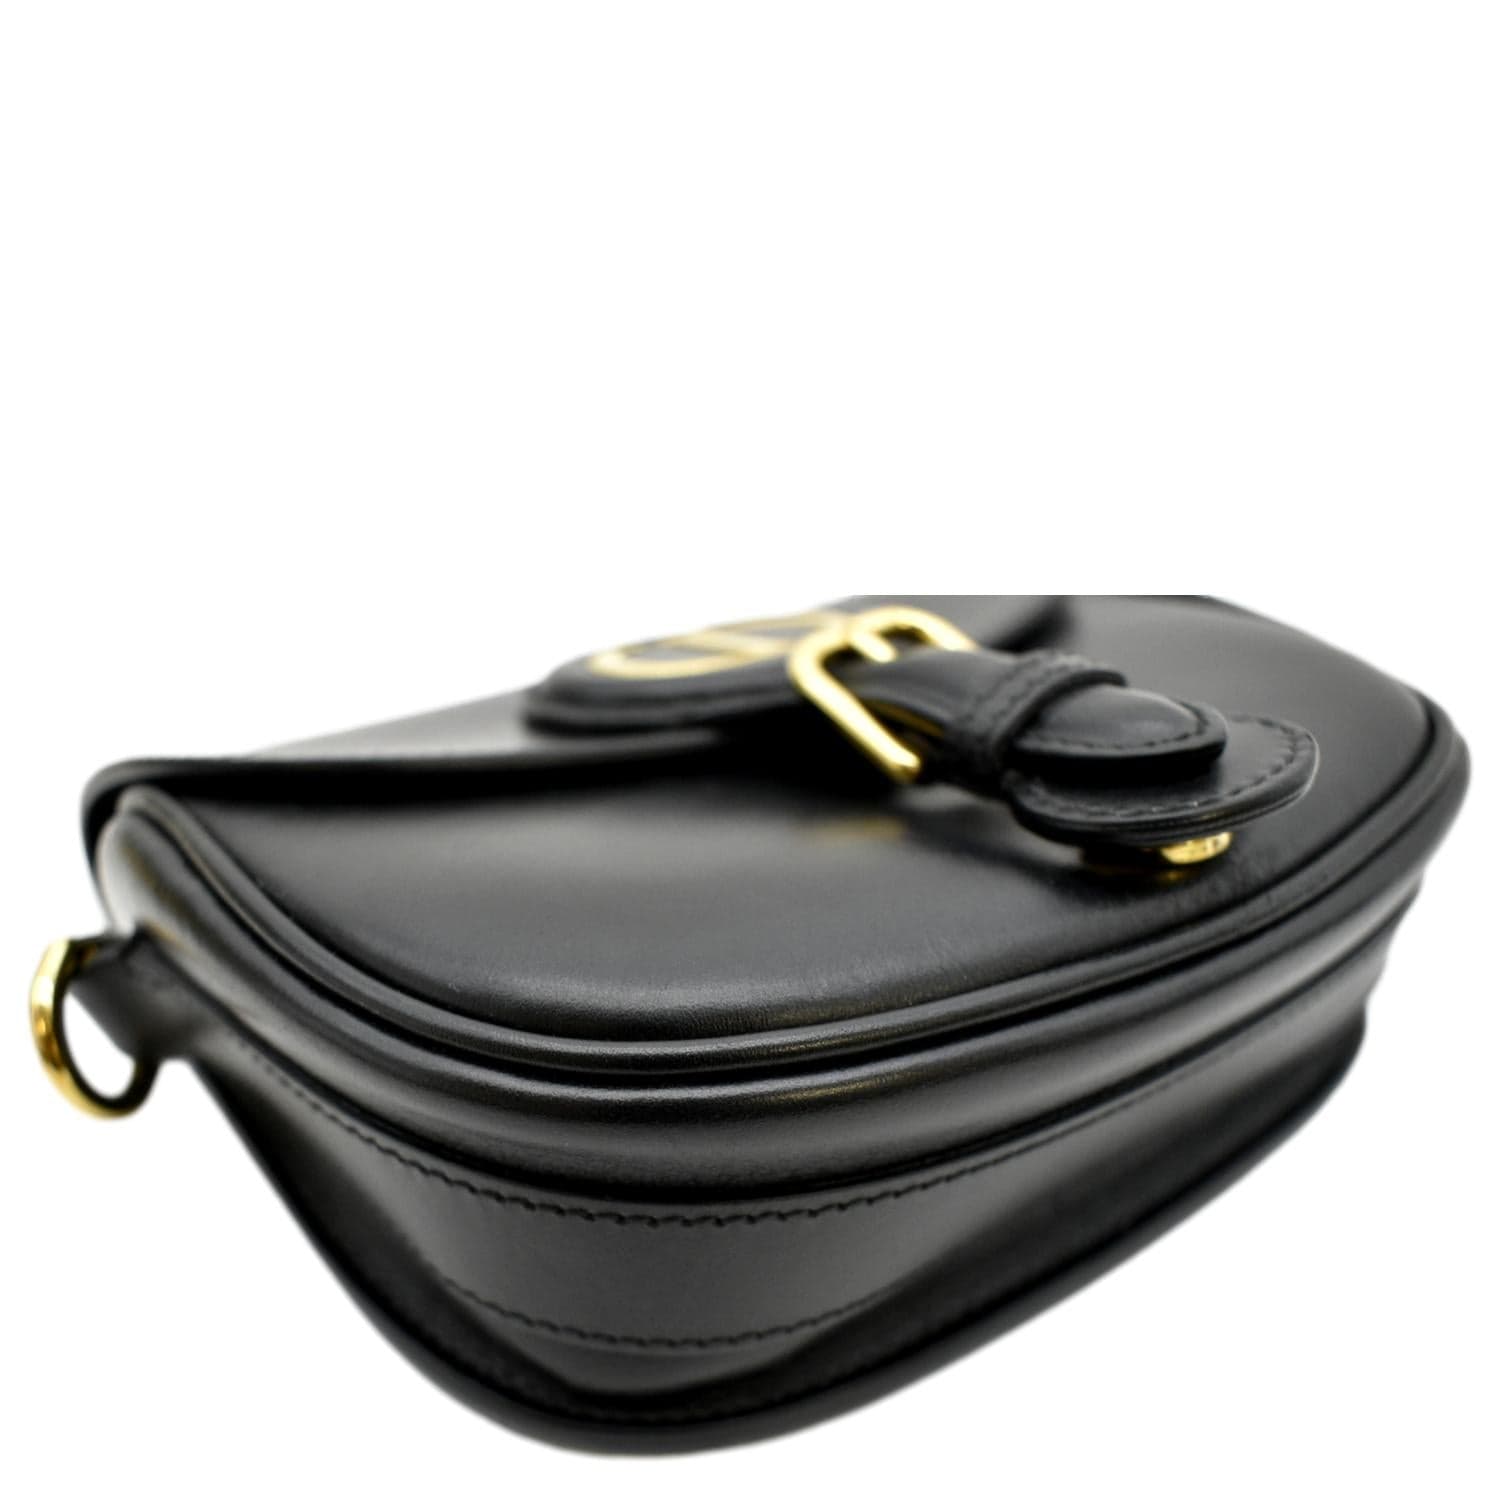 Bobby leather handbag Dior Black in Leather - 33157092